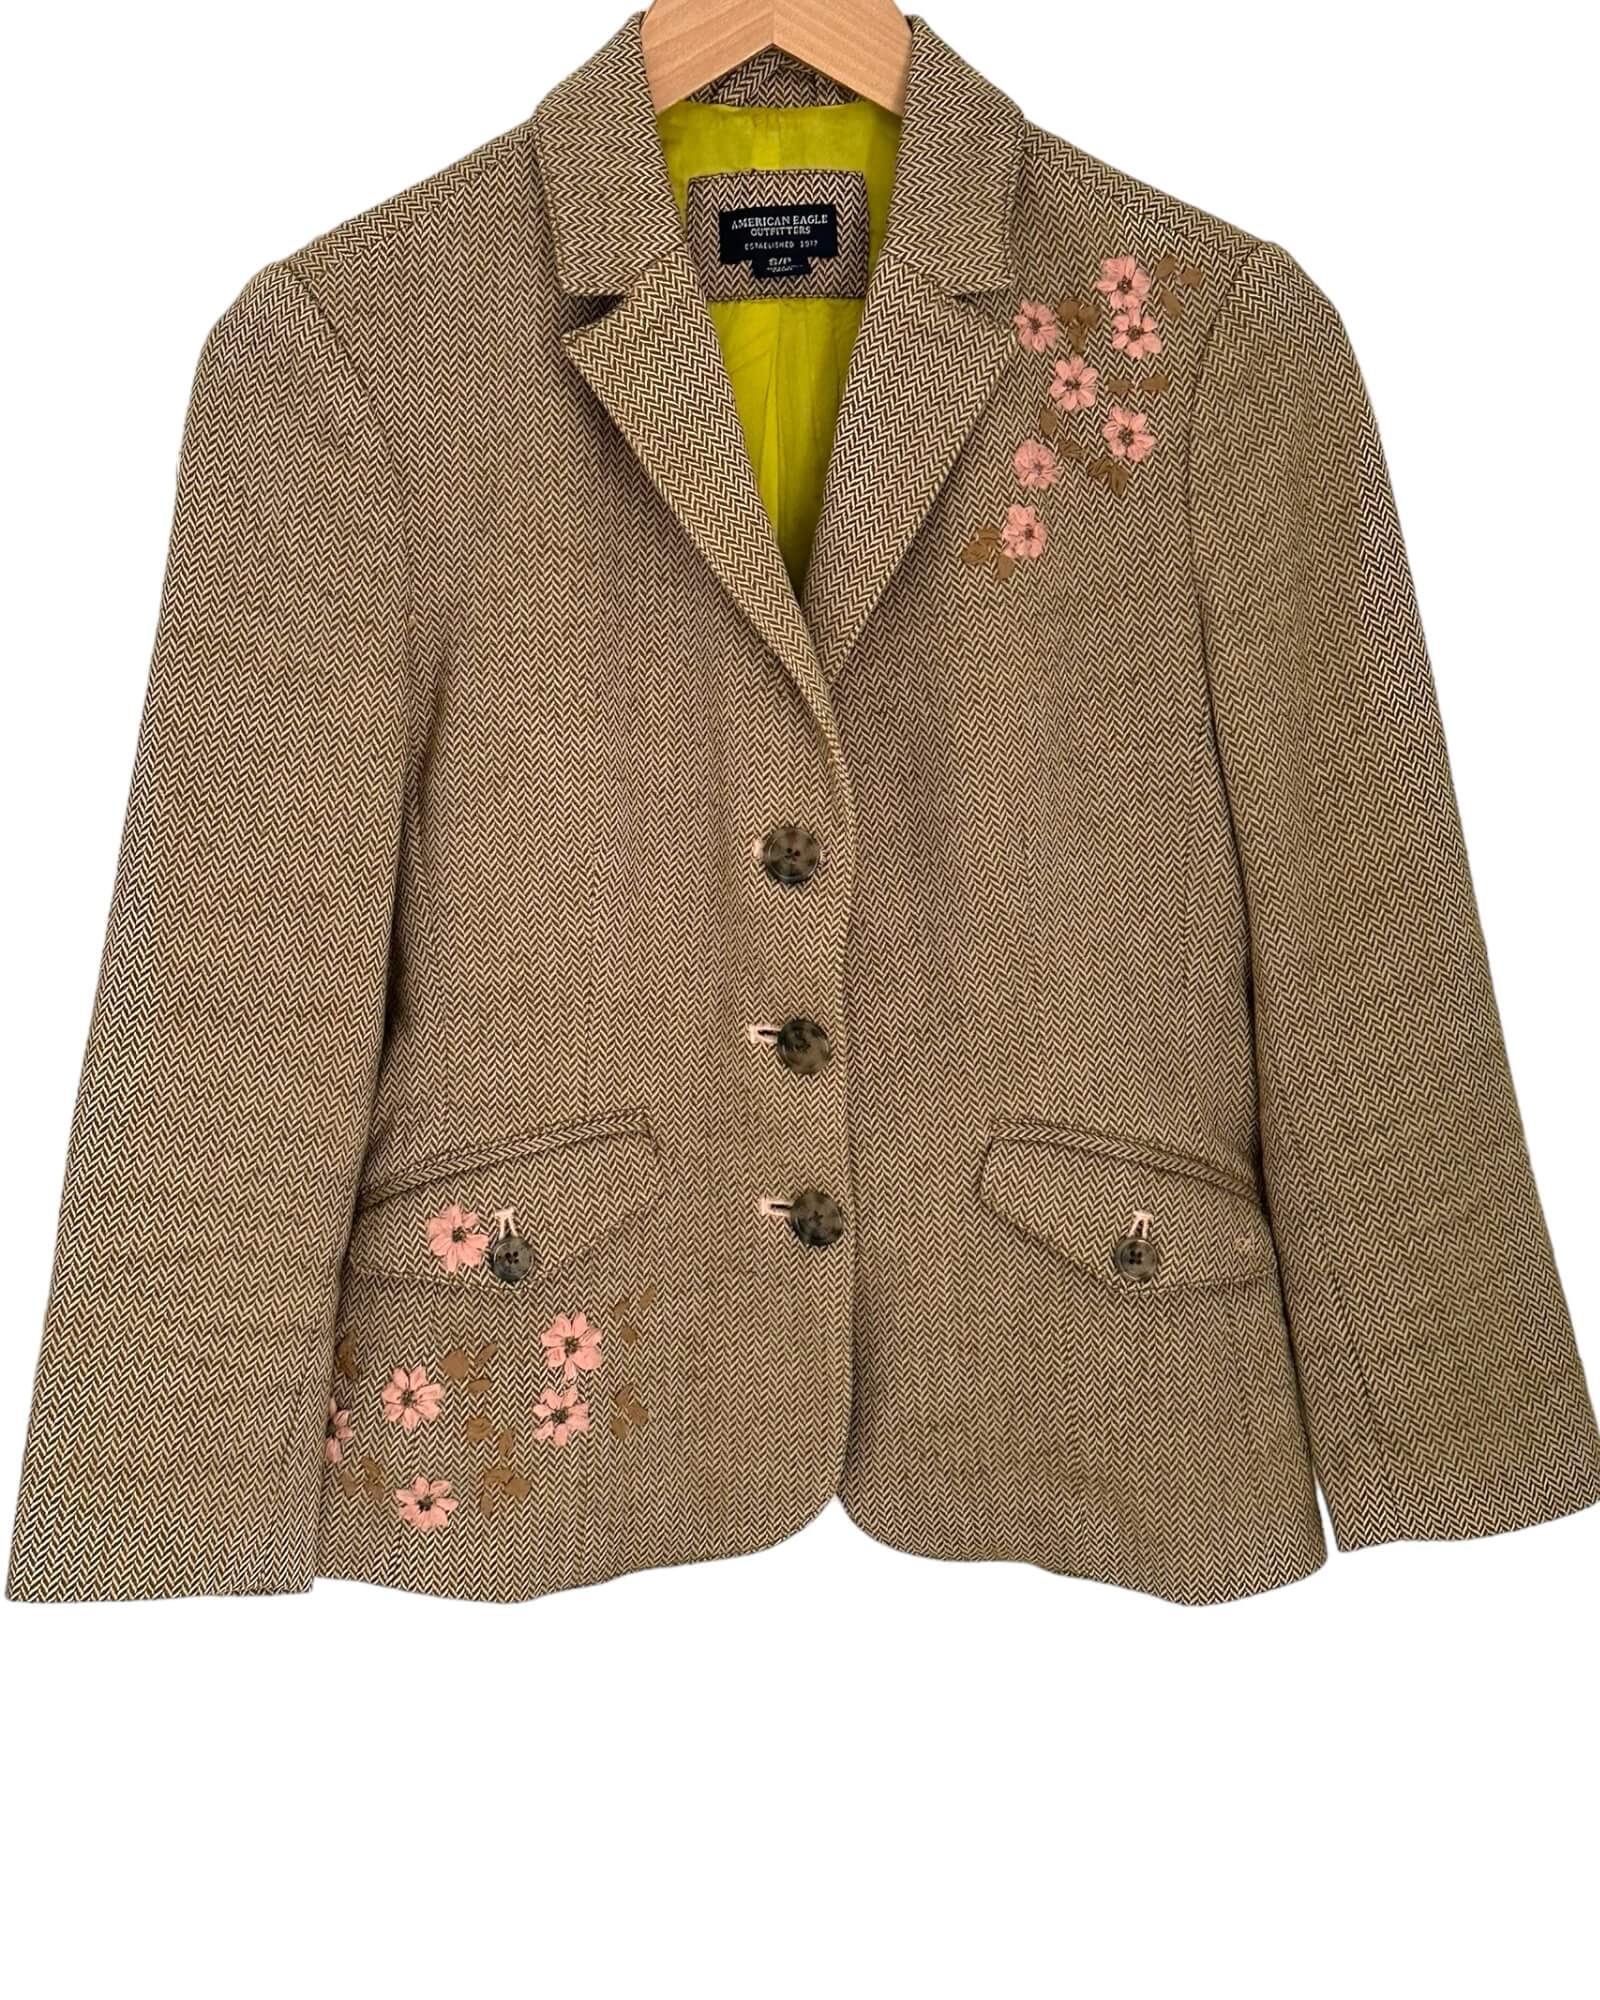 Warm Autumn AMERICAN EAGLE tweed herringbone embroidered blazer jacket